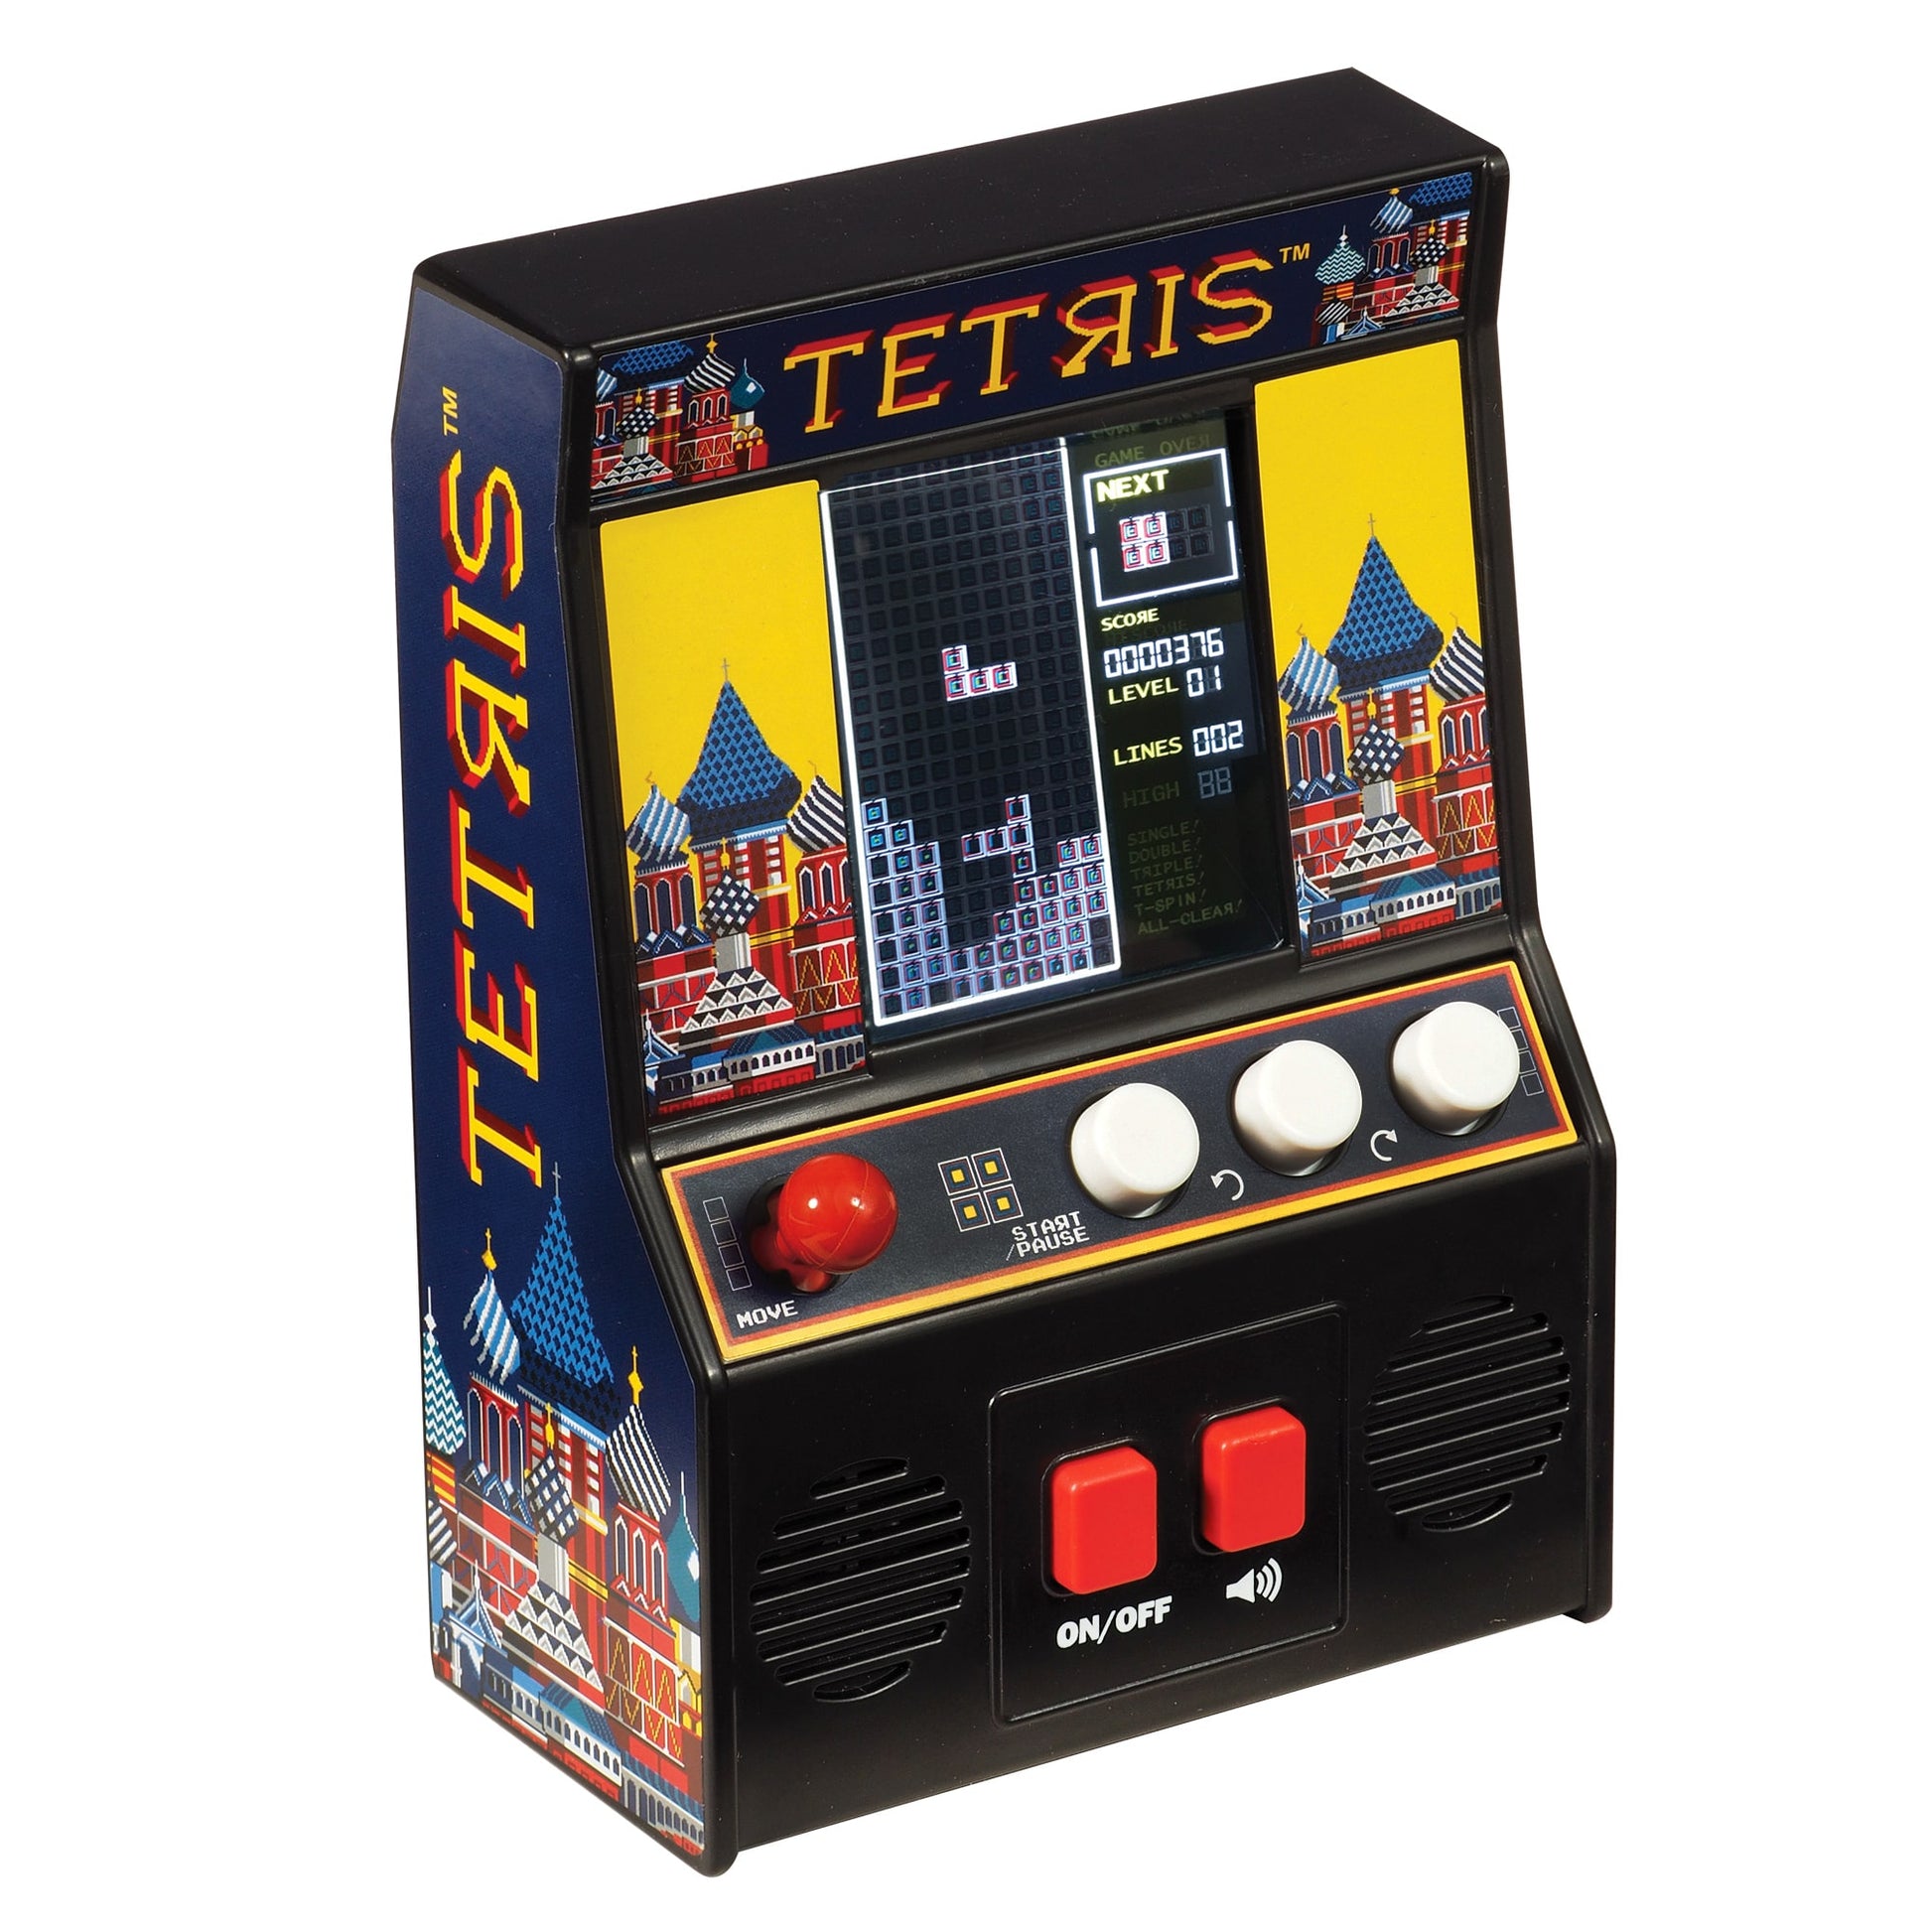 Tetris Arcade Game – Jellybeans